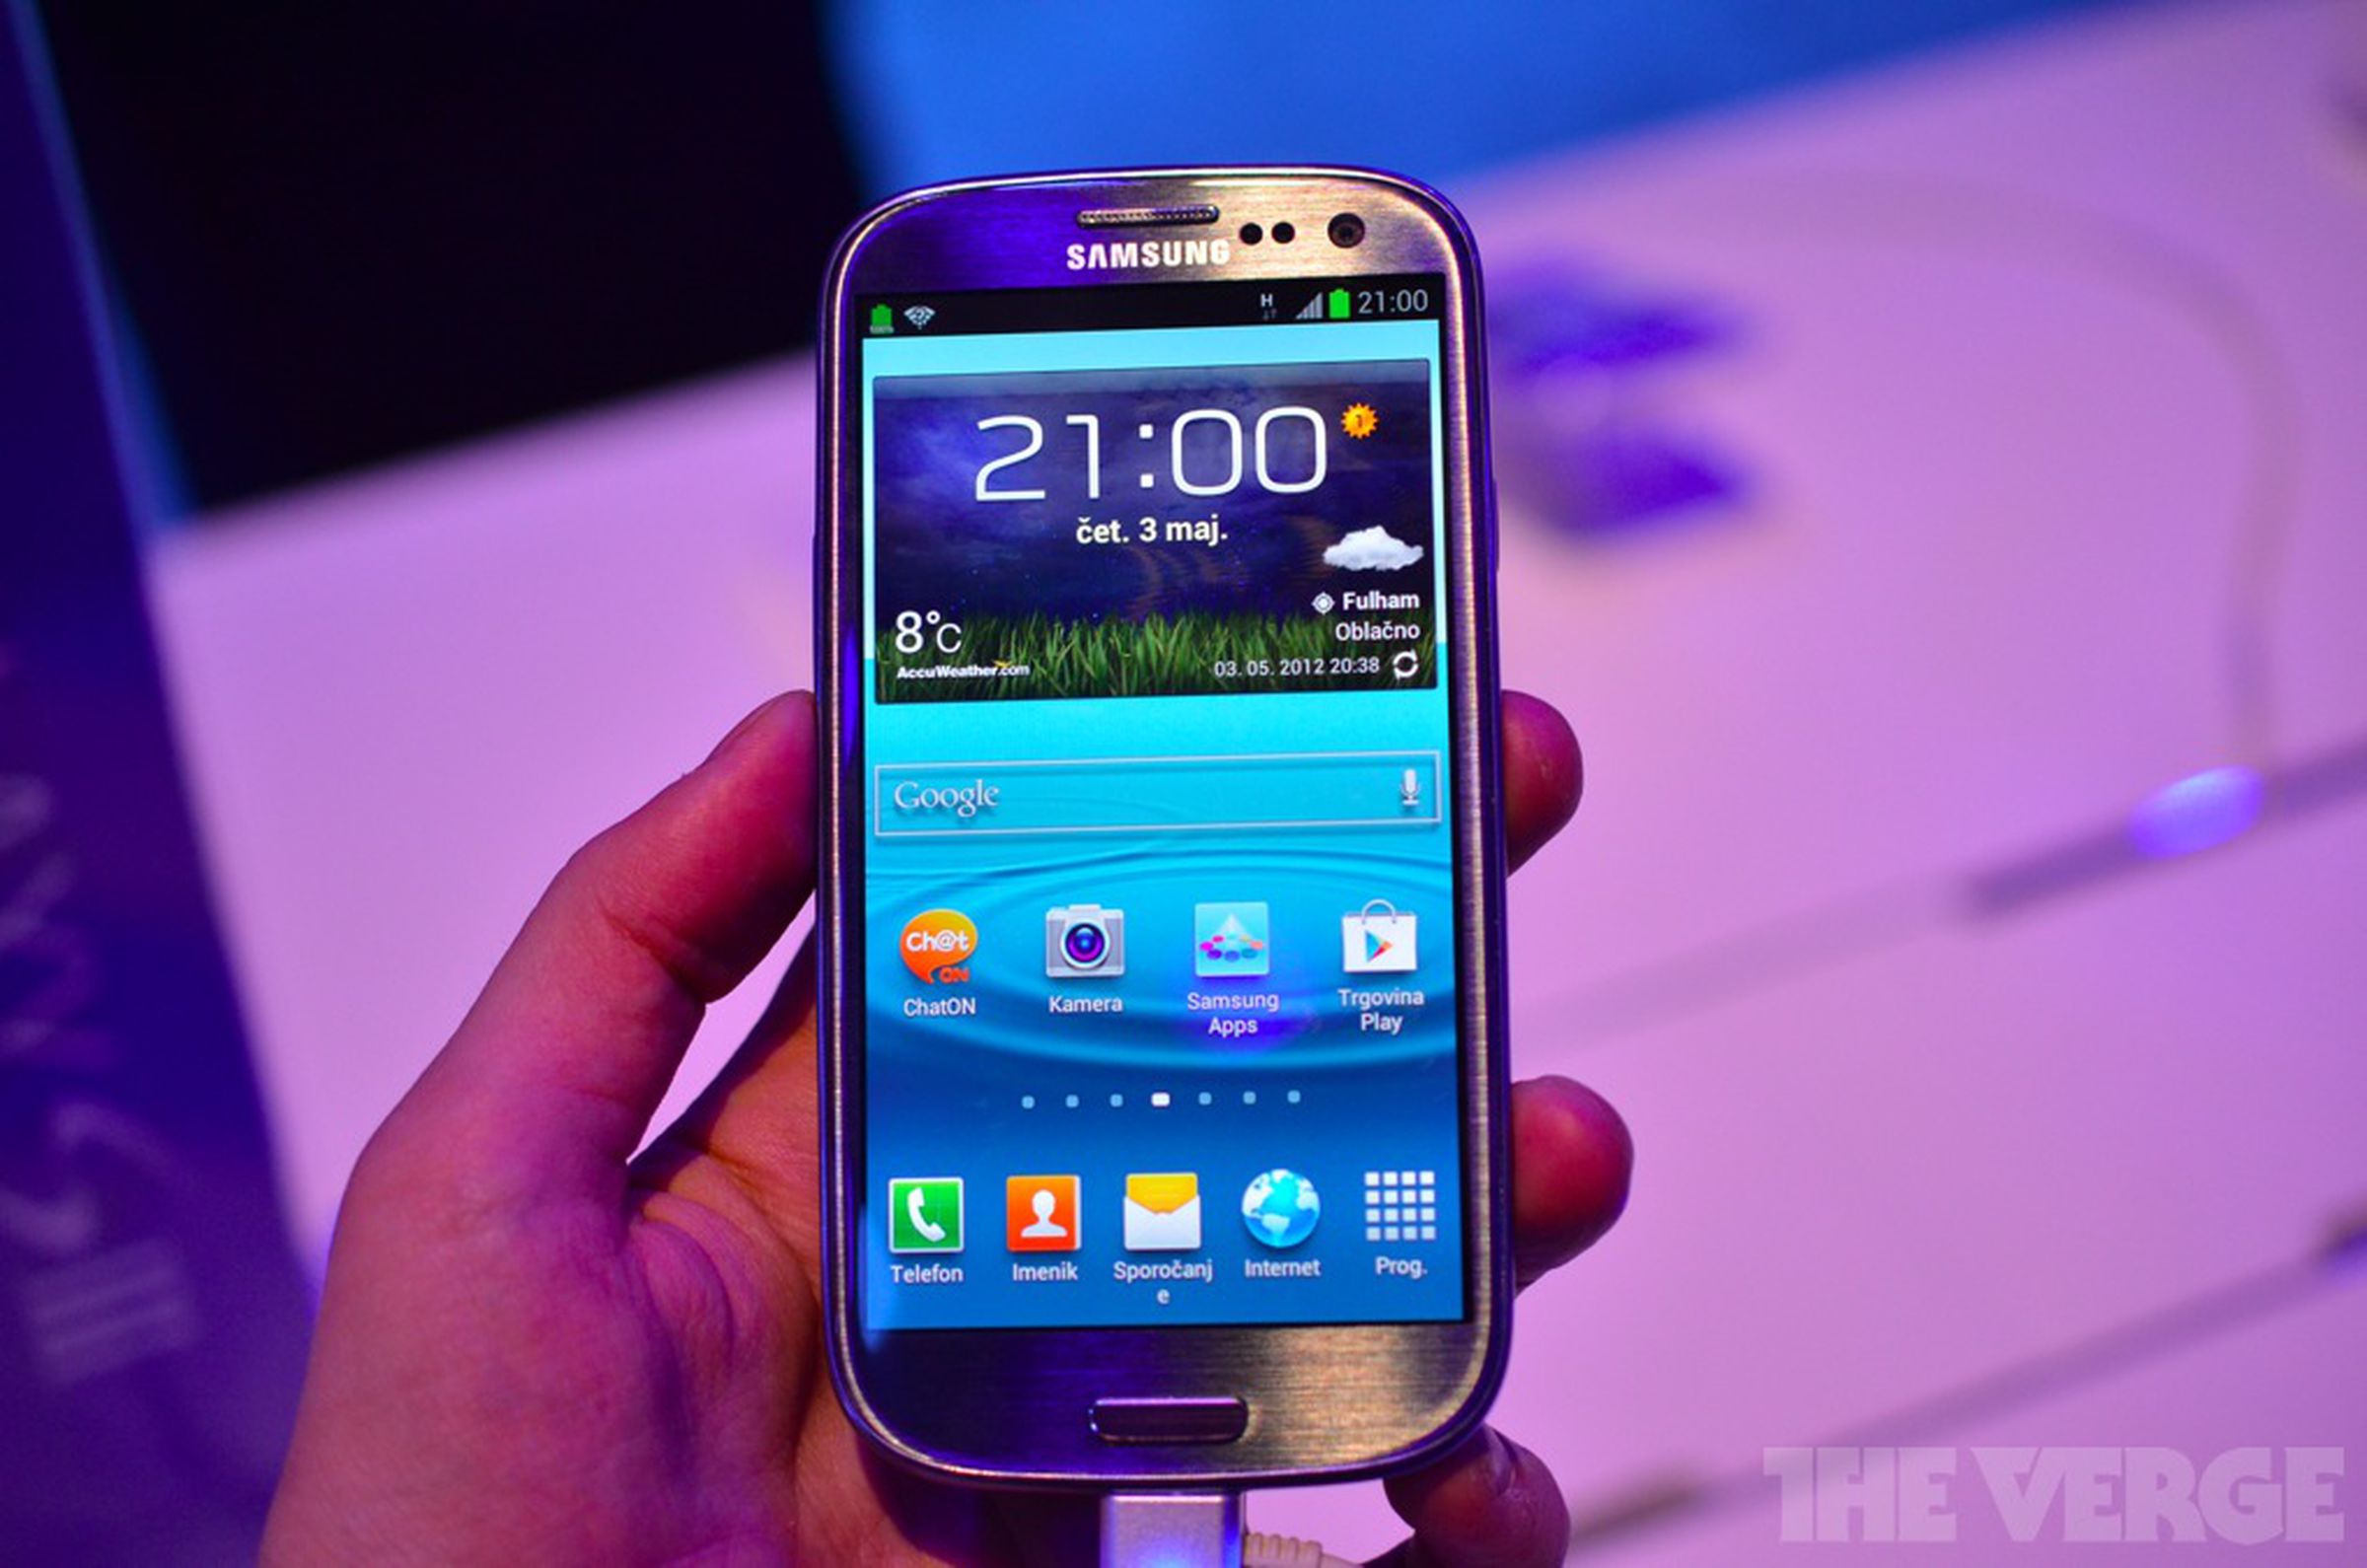 Samsung Galaxy S III first hands-on